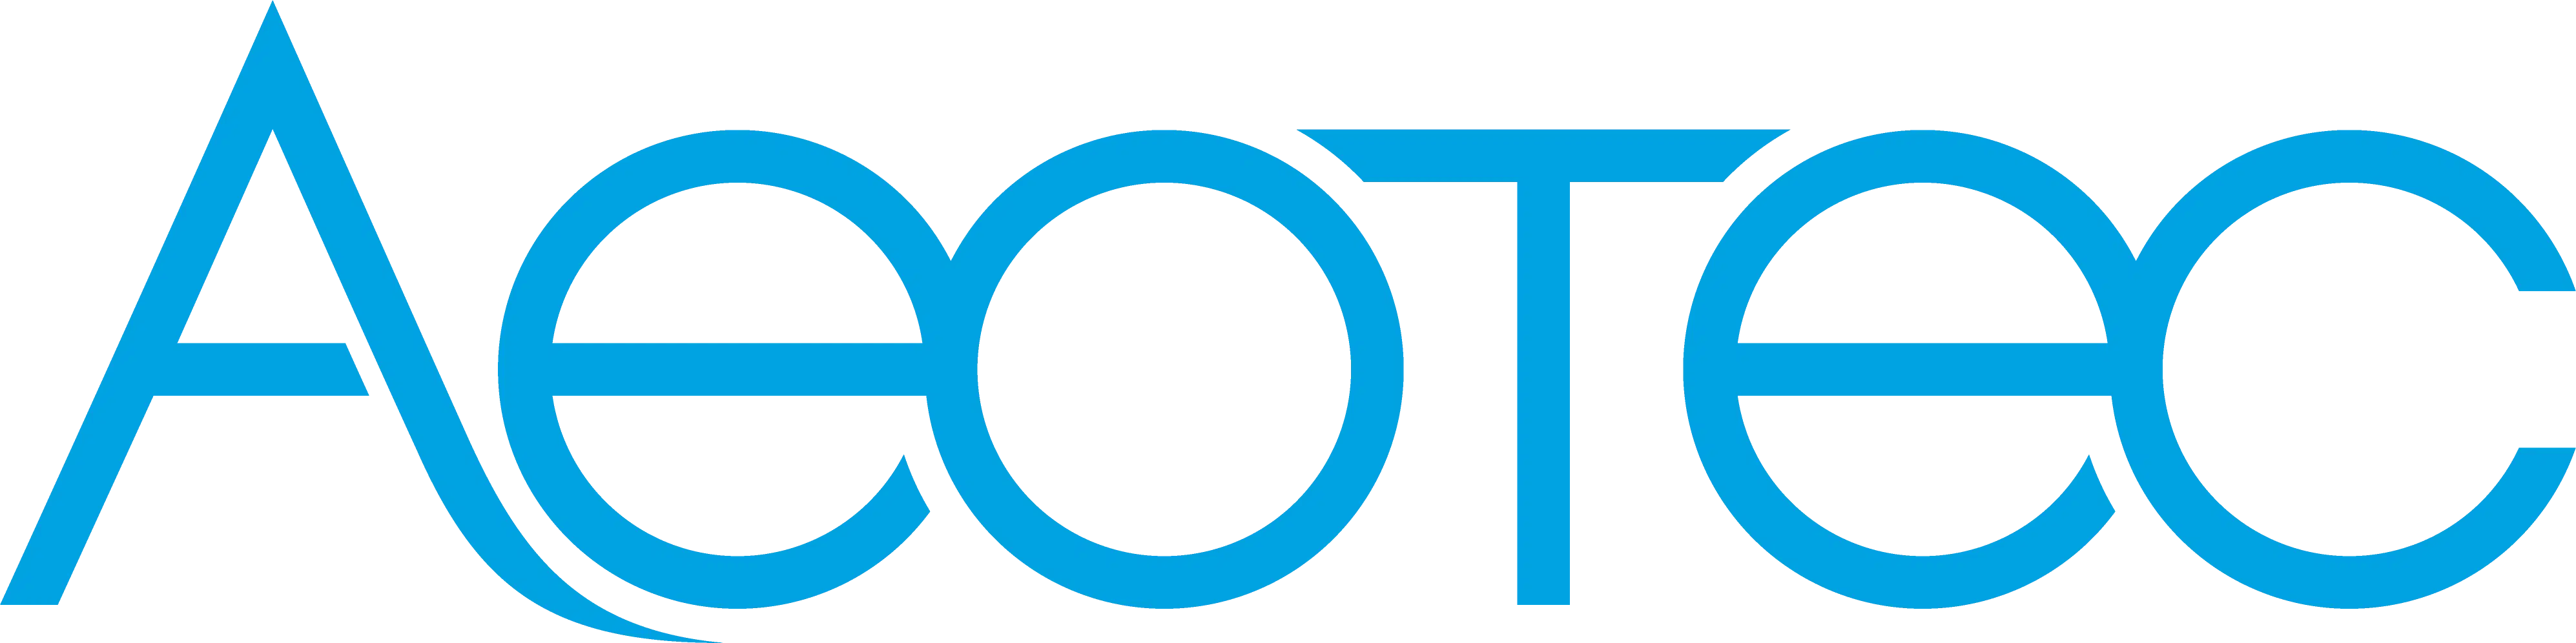 Manufacturer: Aeotec